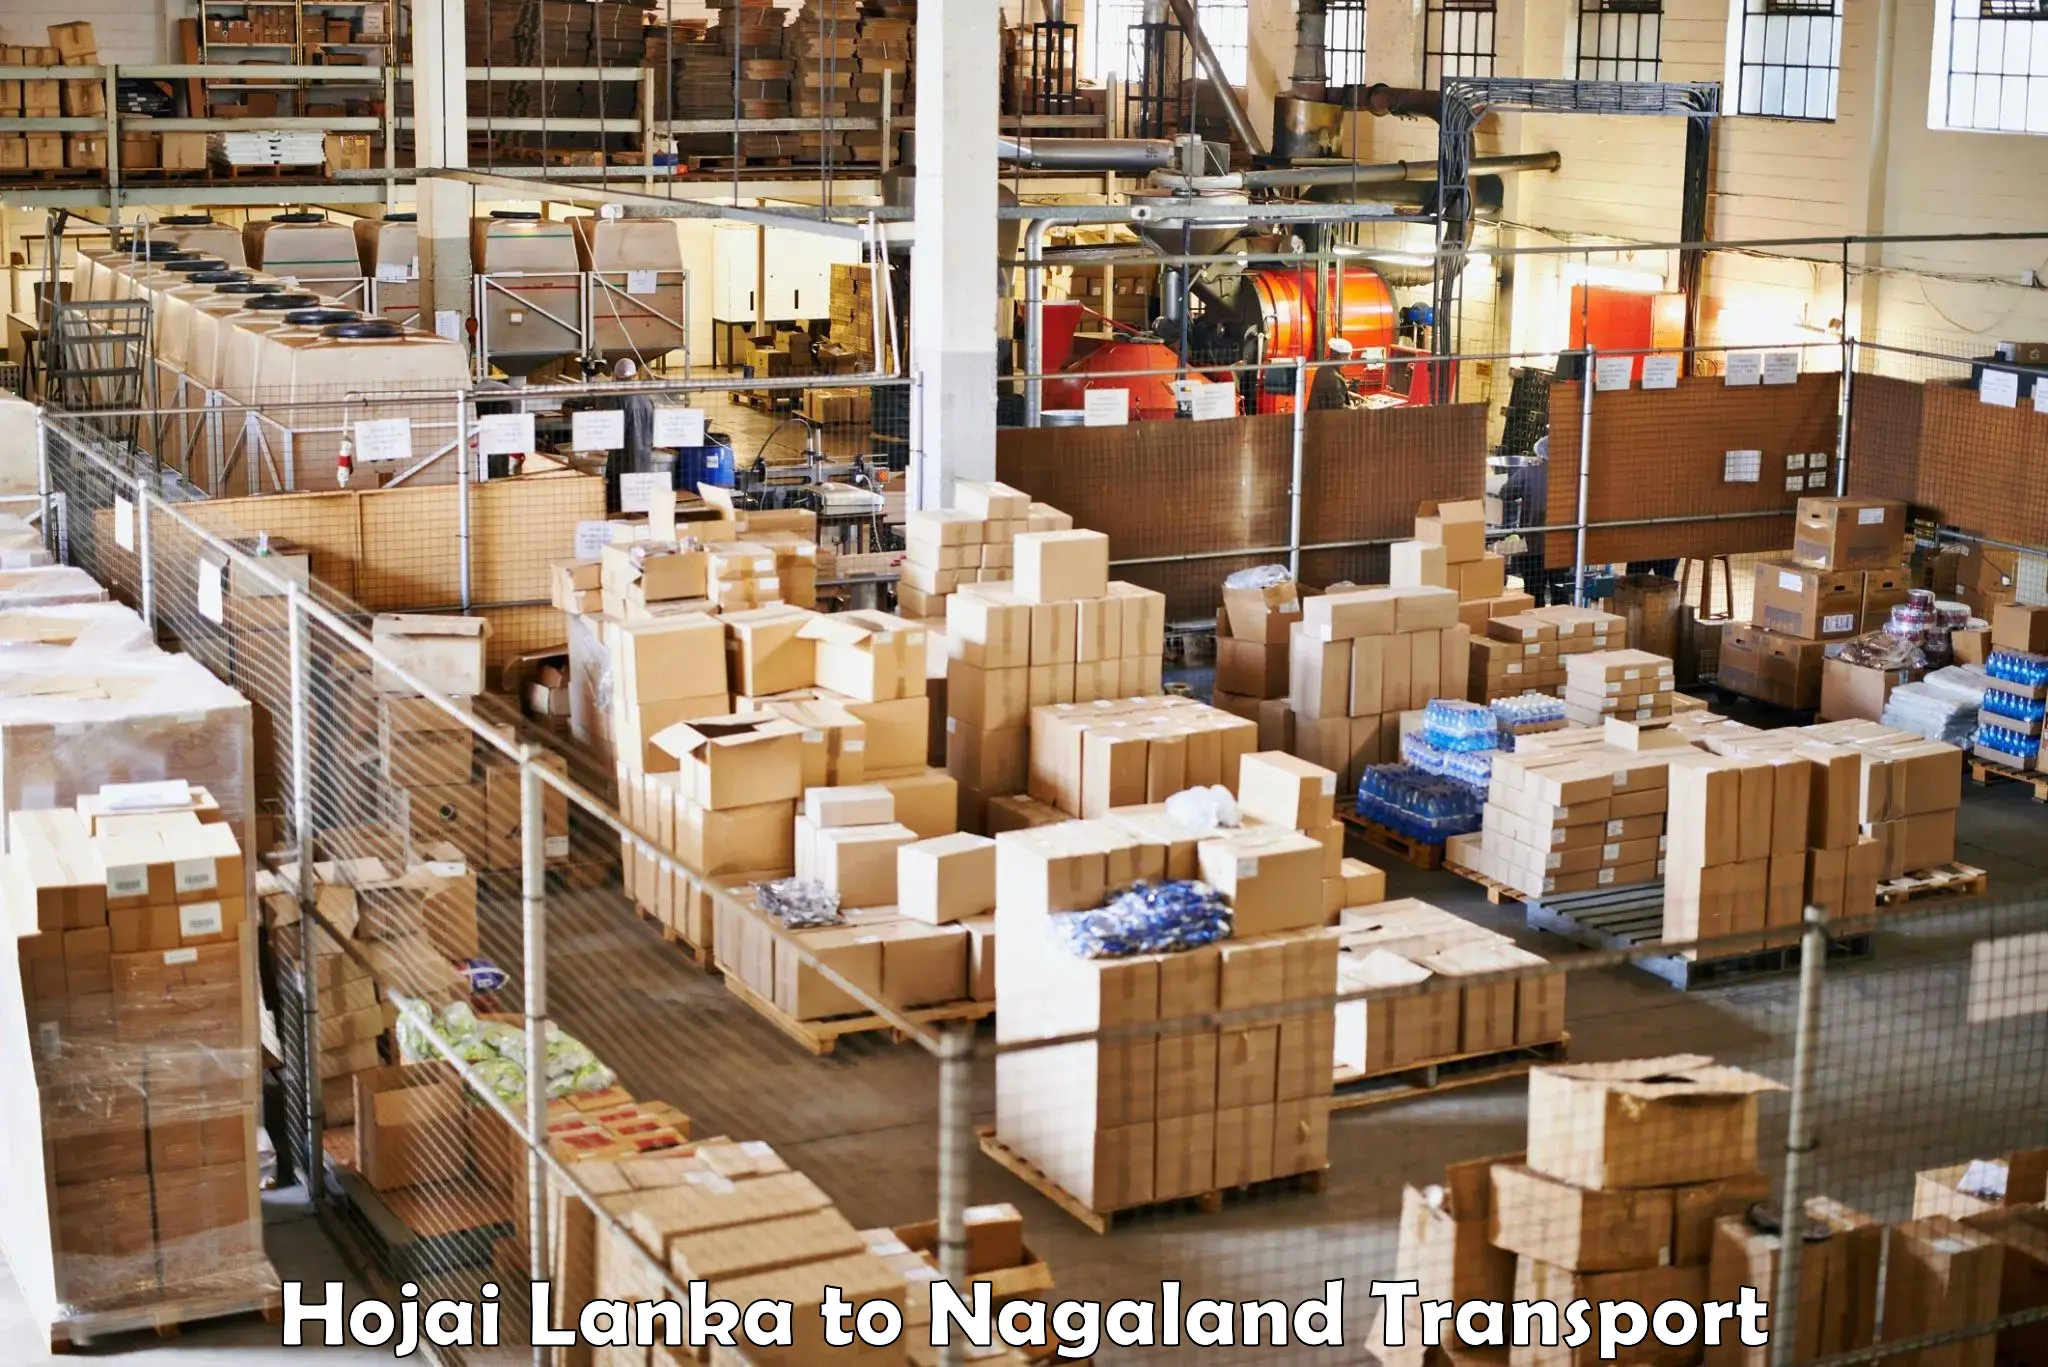 Container transport service Hojai Lanka to Nagaland